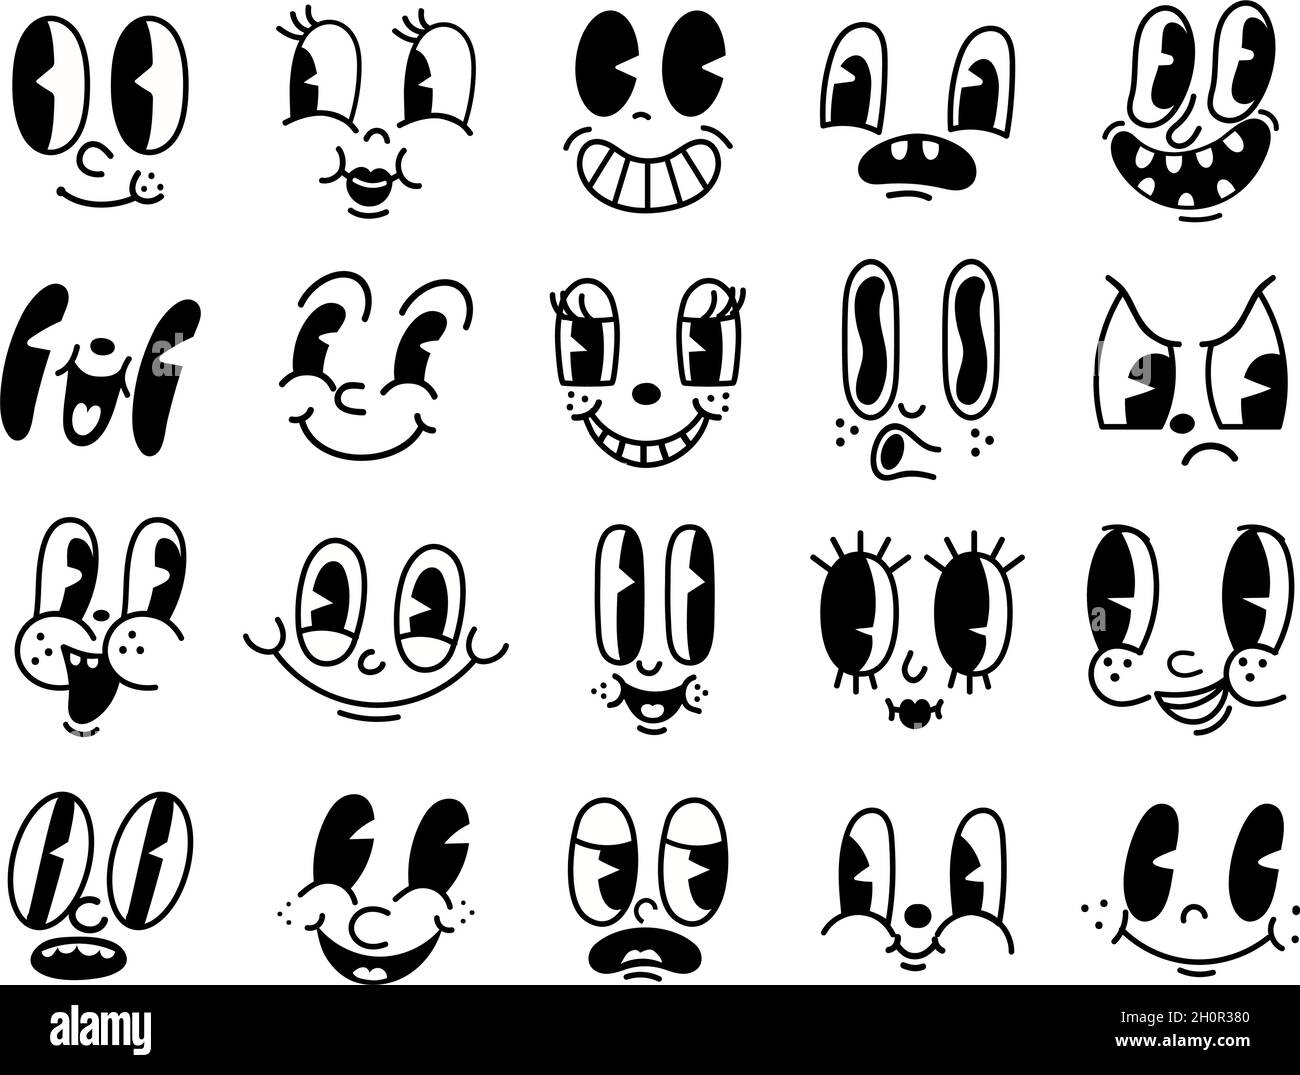 Old Pencils Drawings of Cartoon Characters - Garfield | Flickr